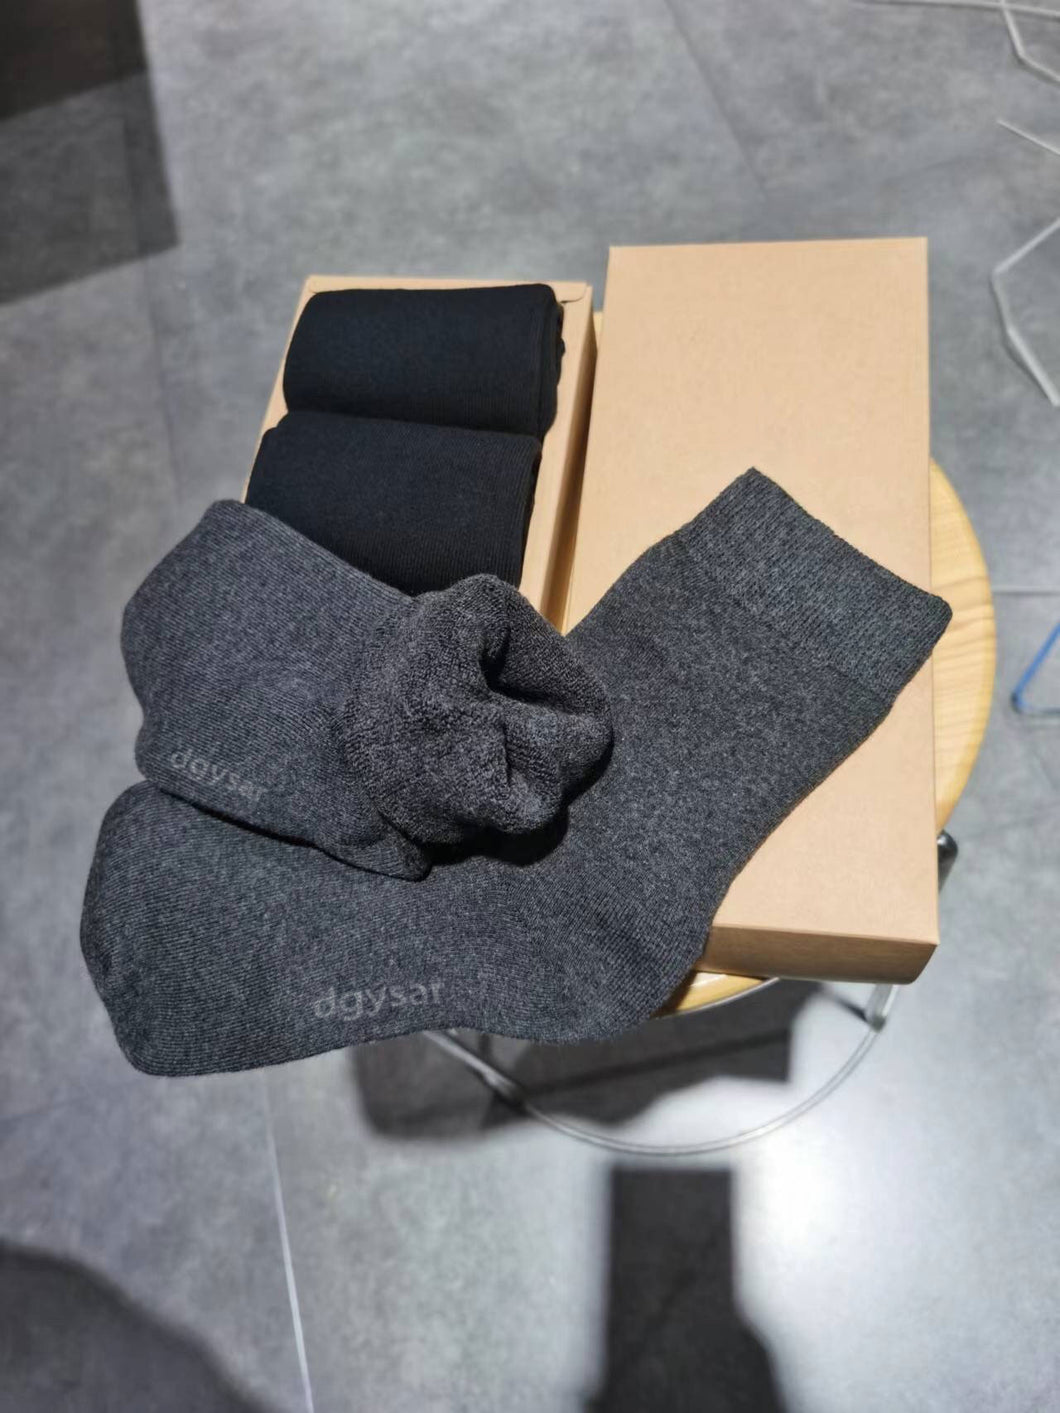 dgysar Stockings, wool socks super thick warm hiking soft comfortable socks in winter